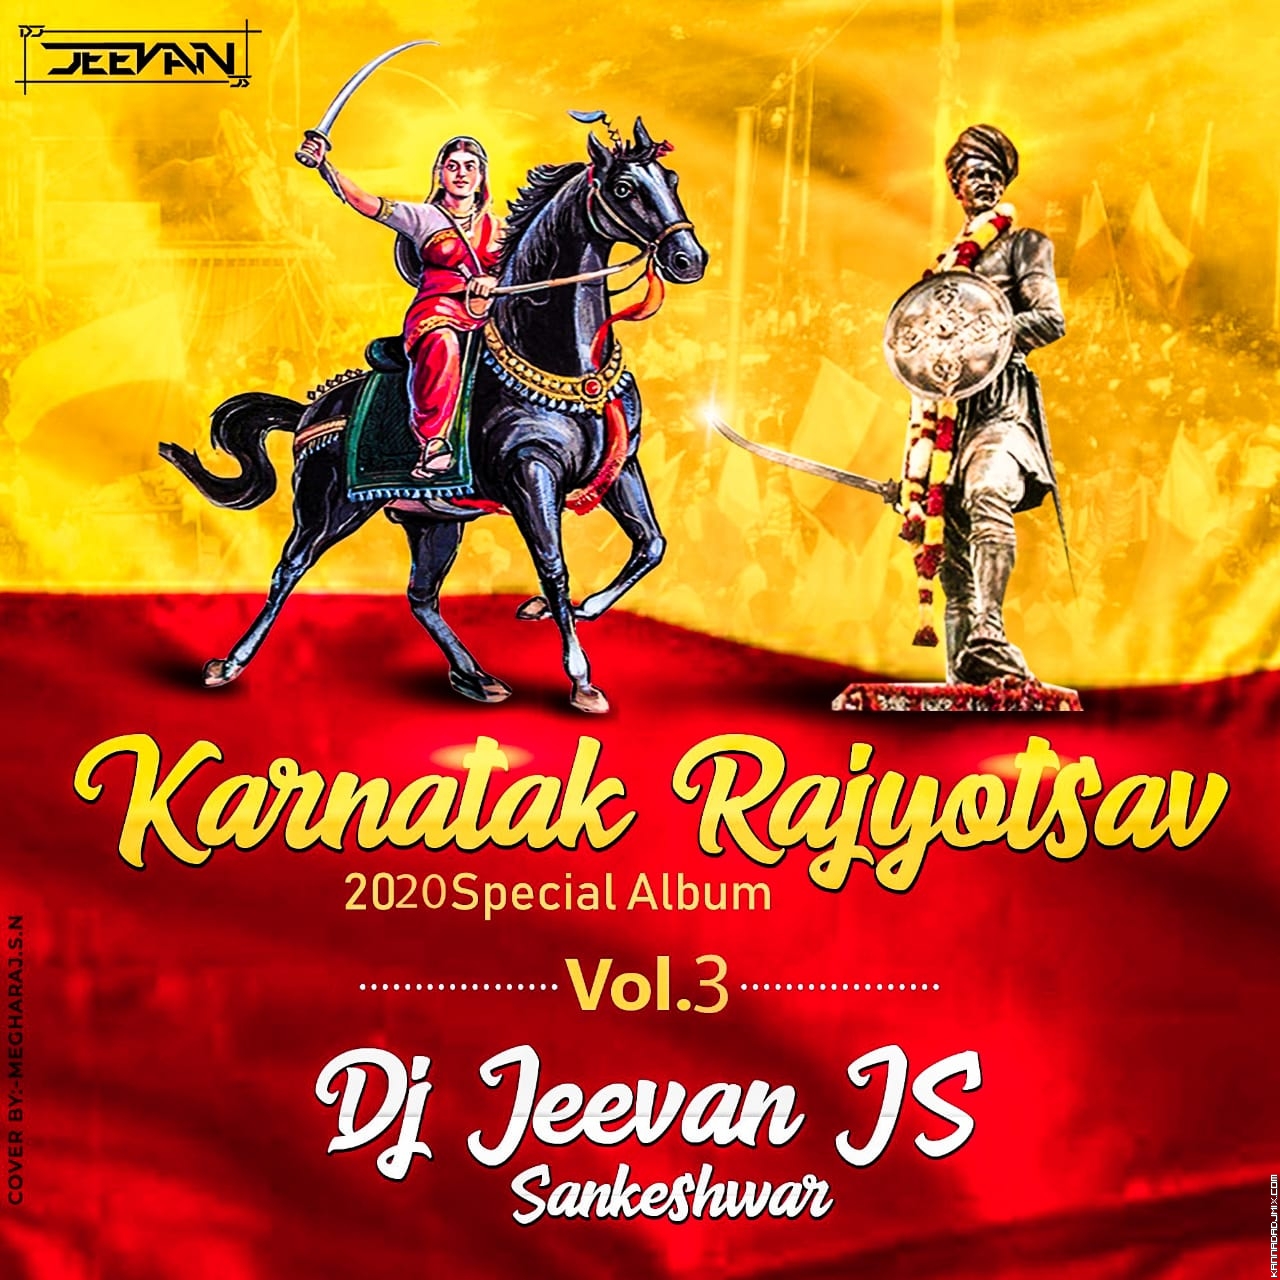 Nam Belgavi In EDM Drop2020 Mix By Dj Jeevan JS Sankeshwar.mp3